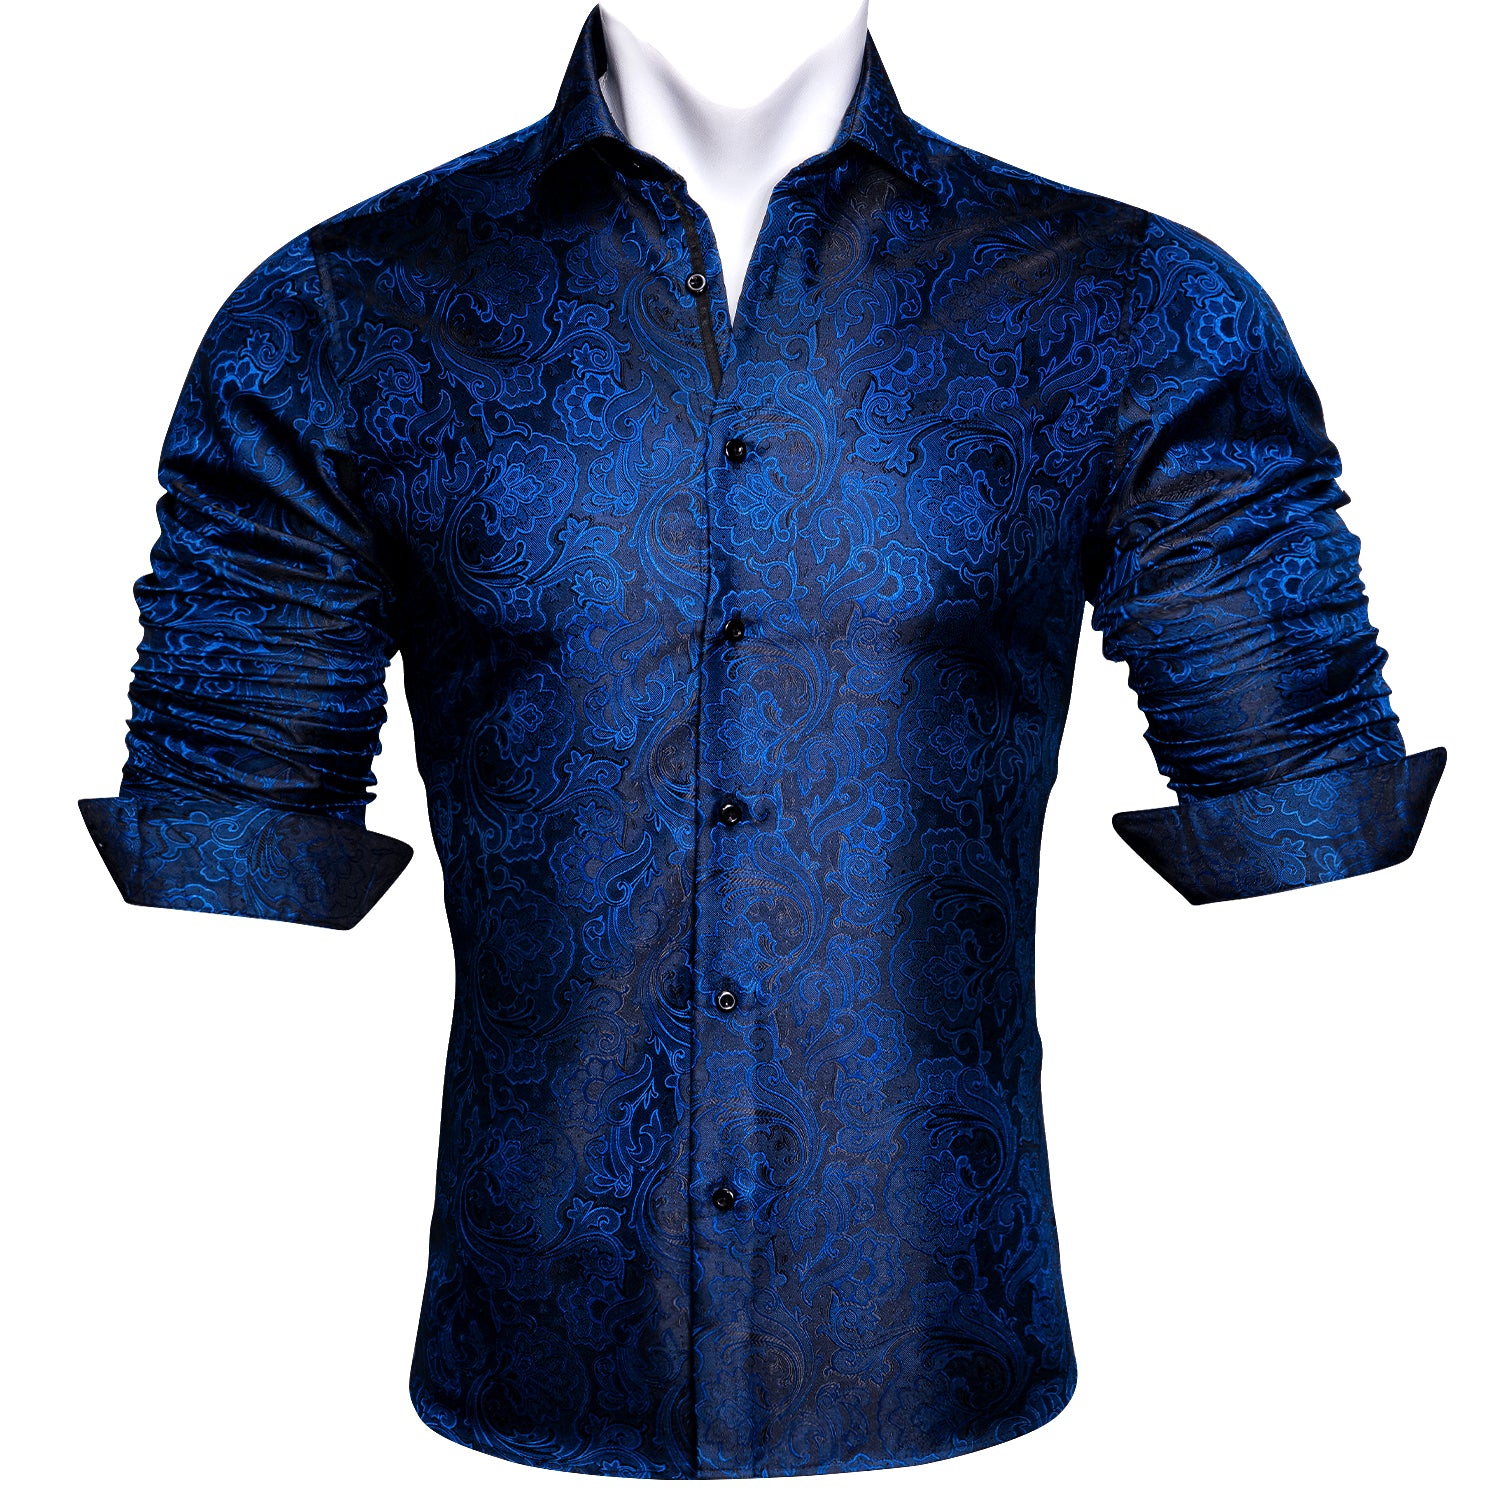 Barry.wang Blue Black Paisley Silk Shirt